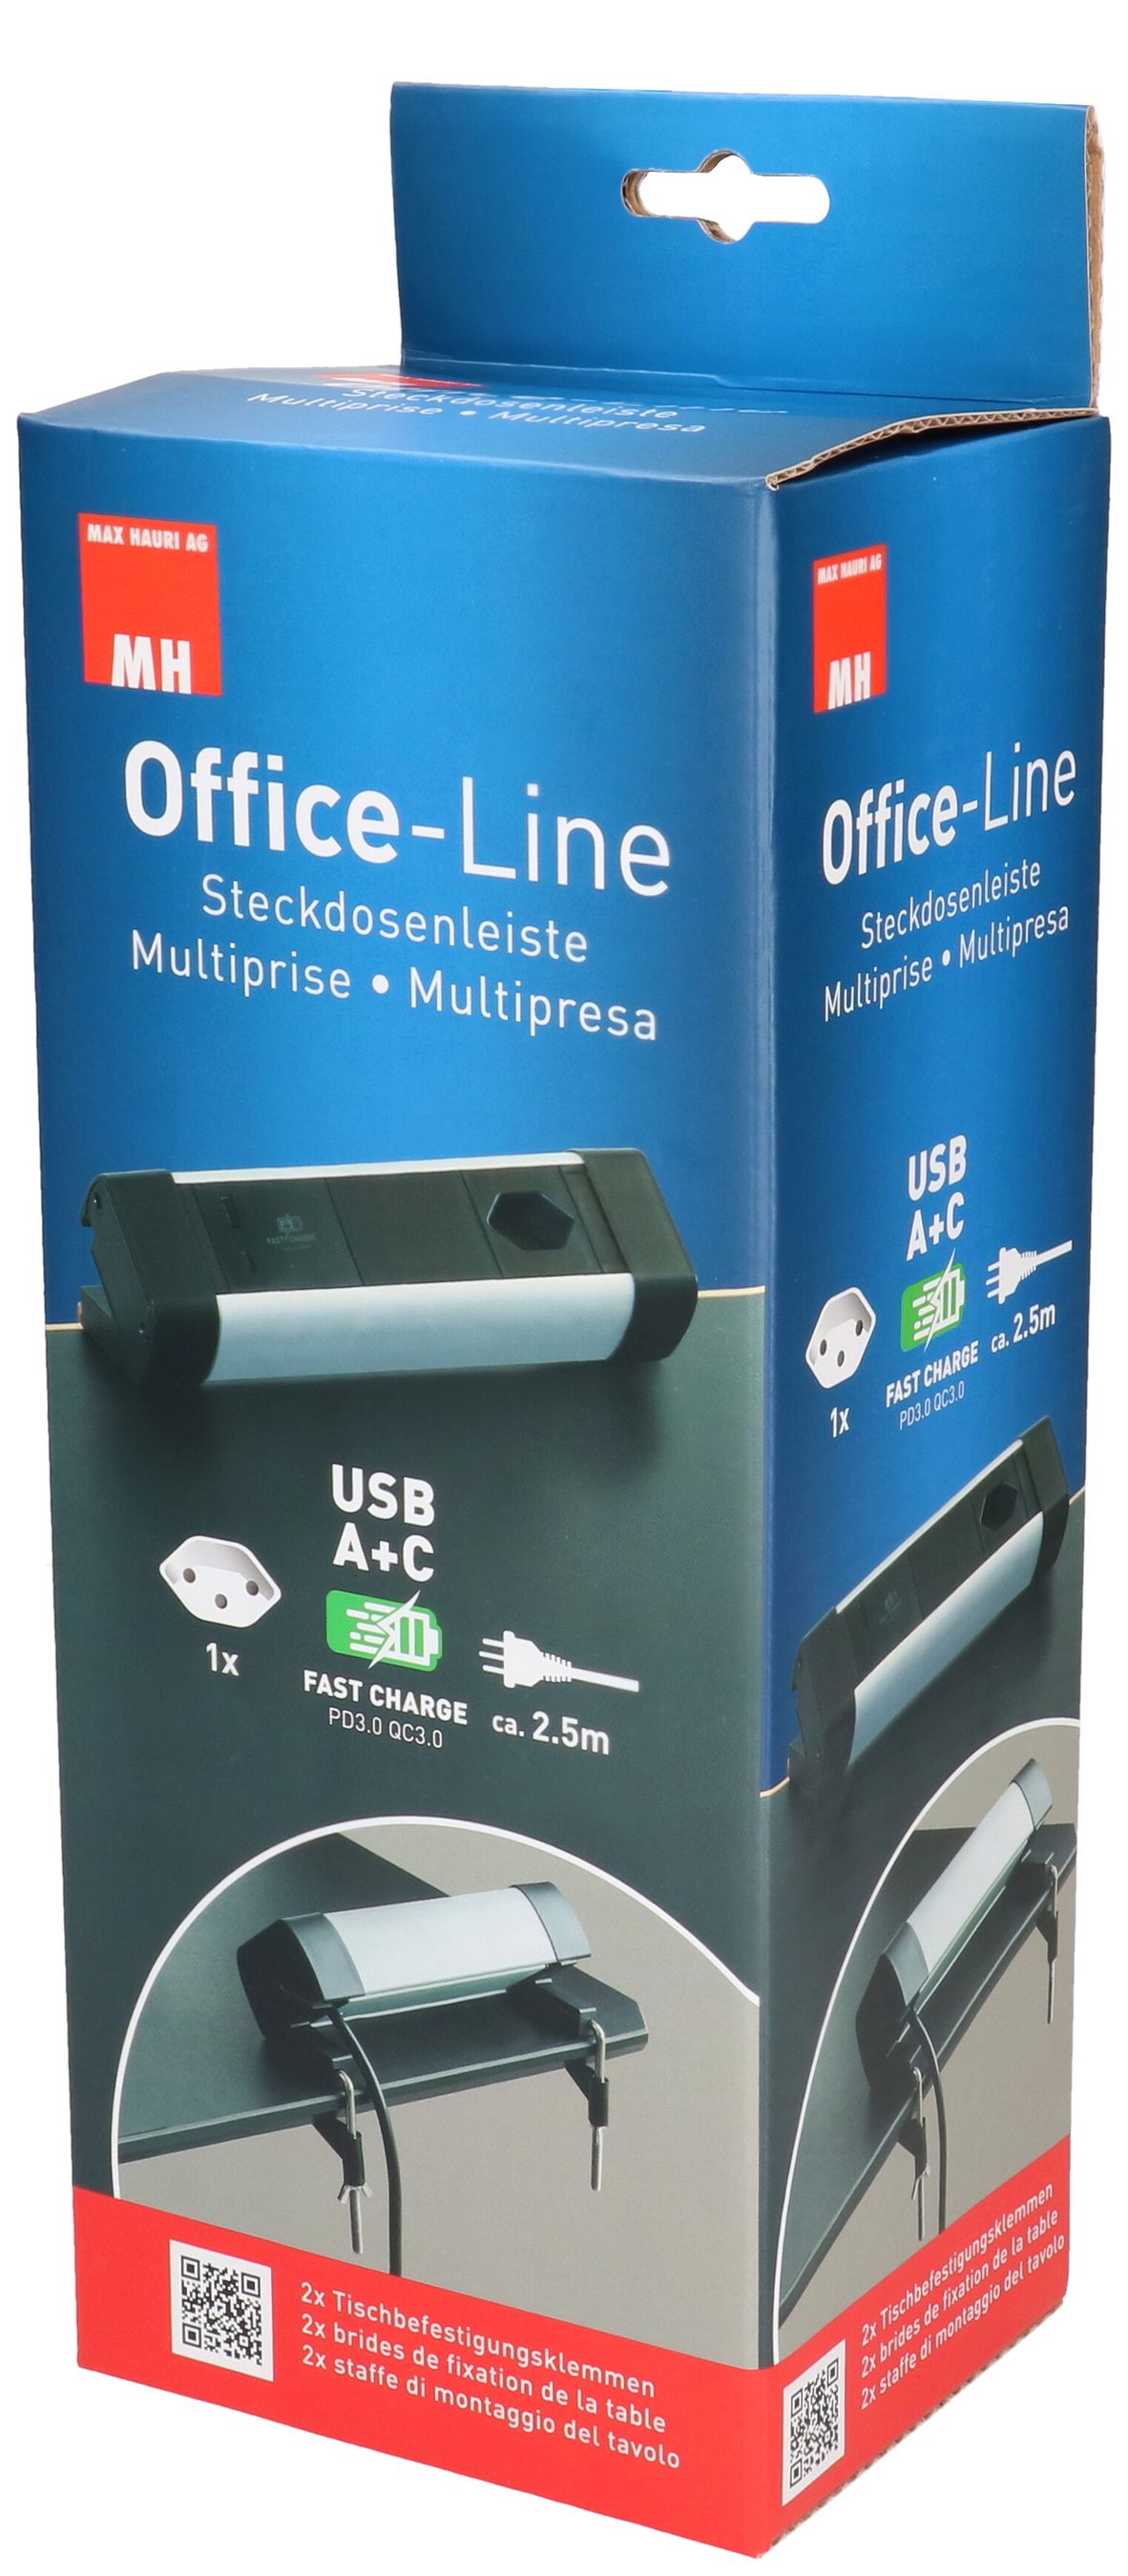 Steckdosenleiste Office Line 1x Typ 13 1x USB A 1x USB C, PD+QC